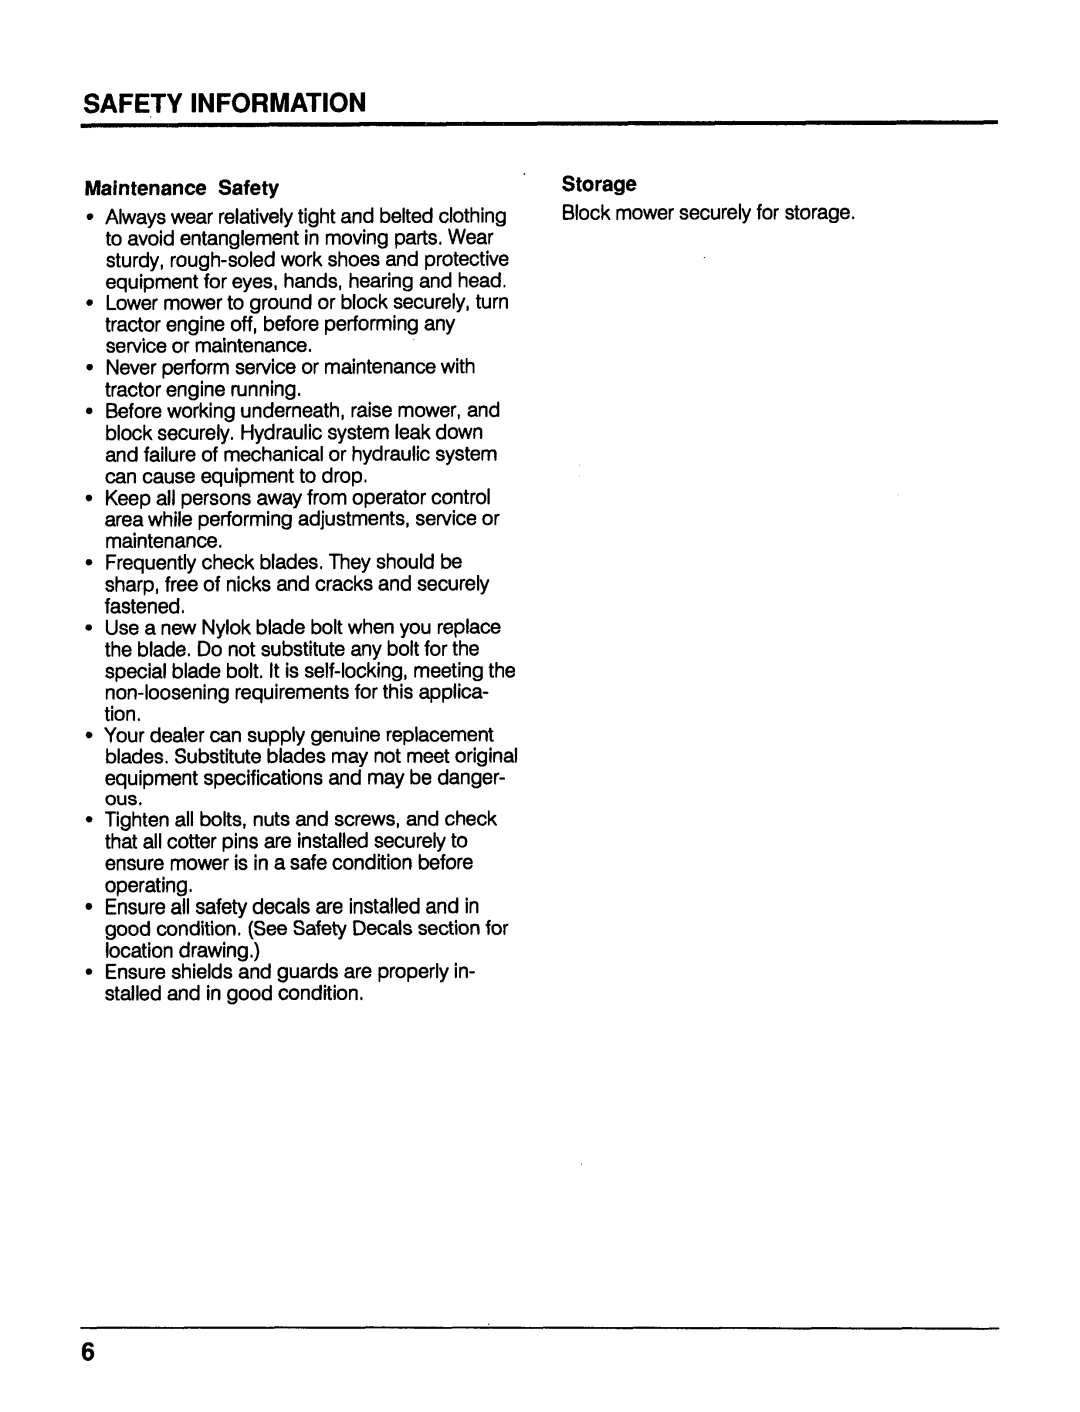 Honda Power Equipment MM52 manual Maintenance Safety, Storage, Safety Information 